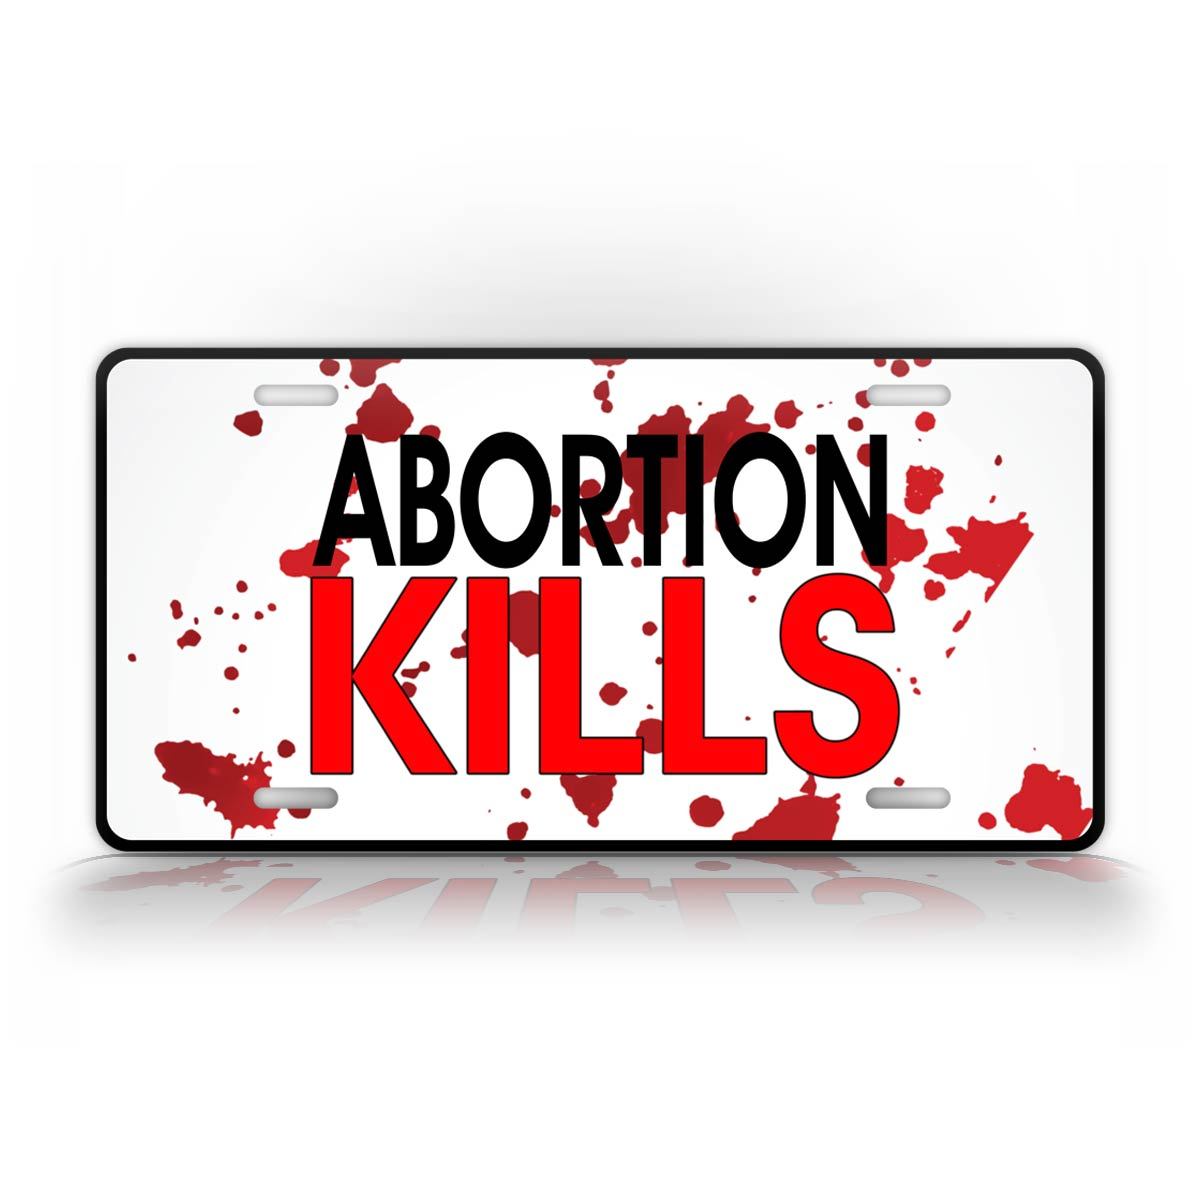 Abortion Kills License Plate